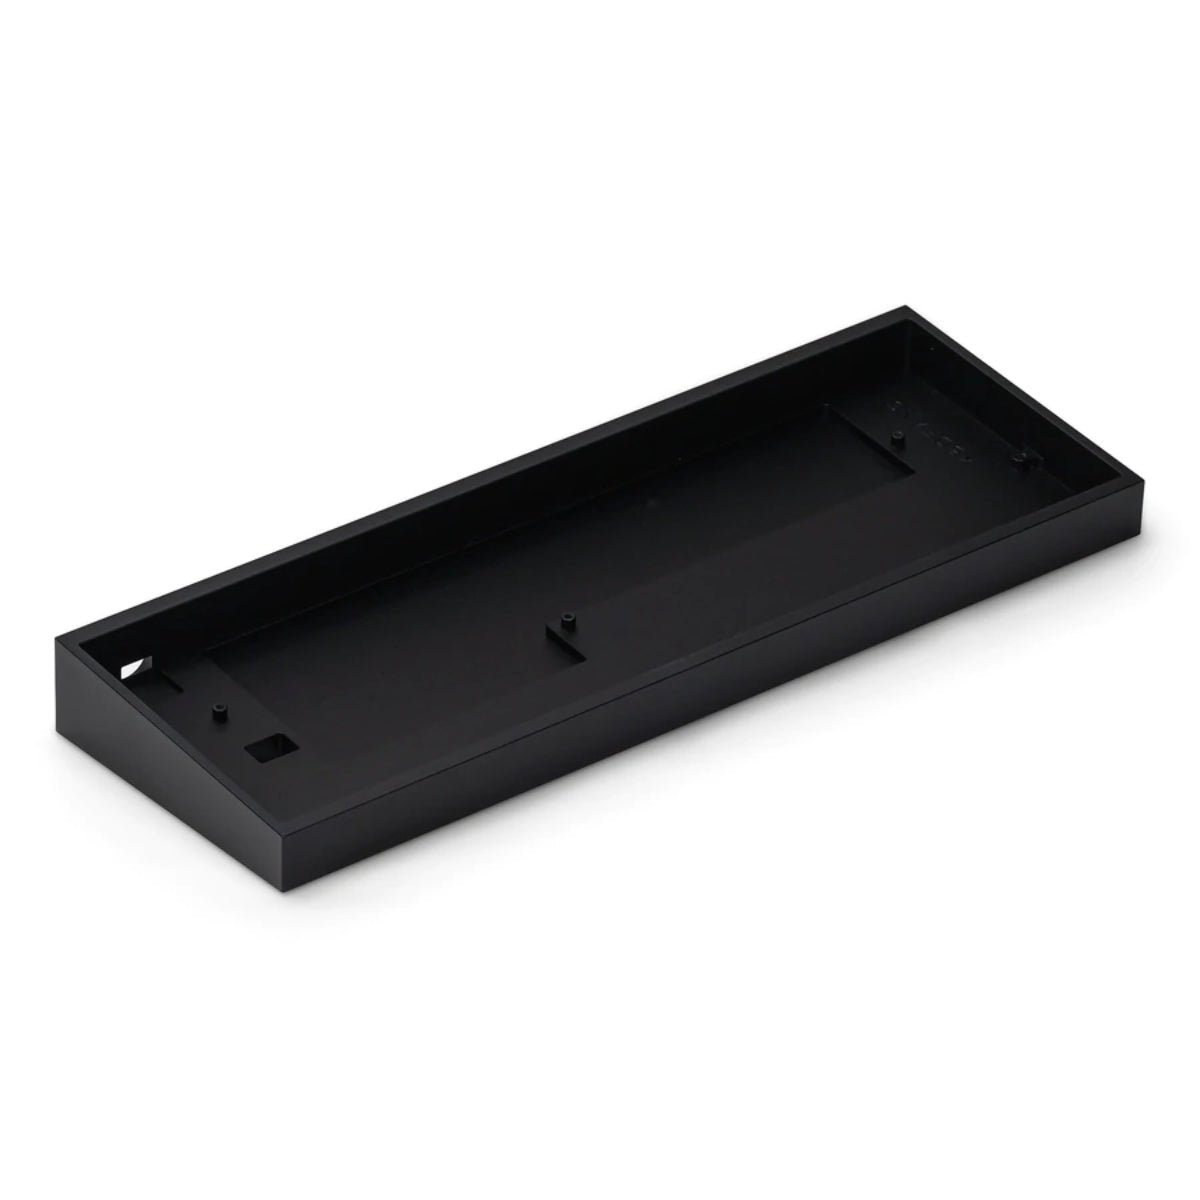 KBD Fans TOFU60 Aluminum 60% Keyboard Case - Black - Store 974 | ستور ٩٧٤